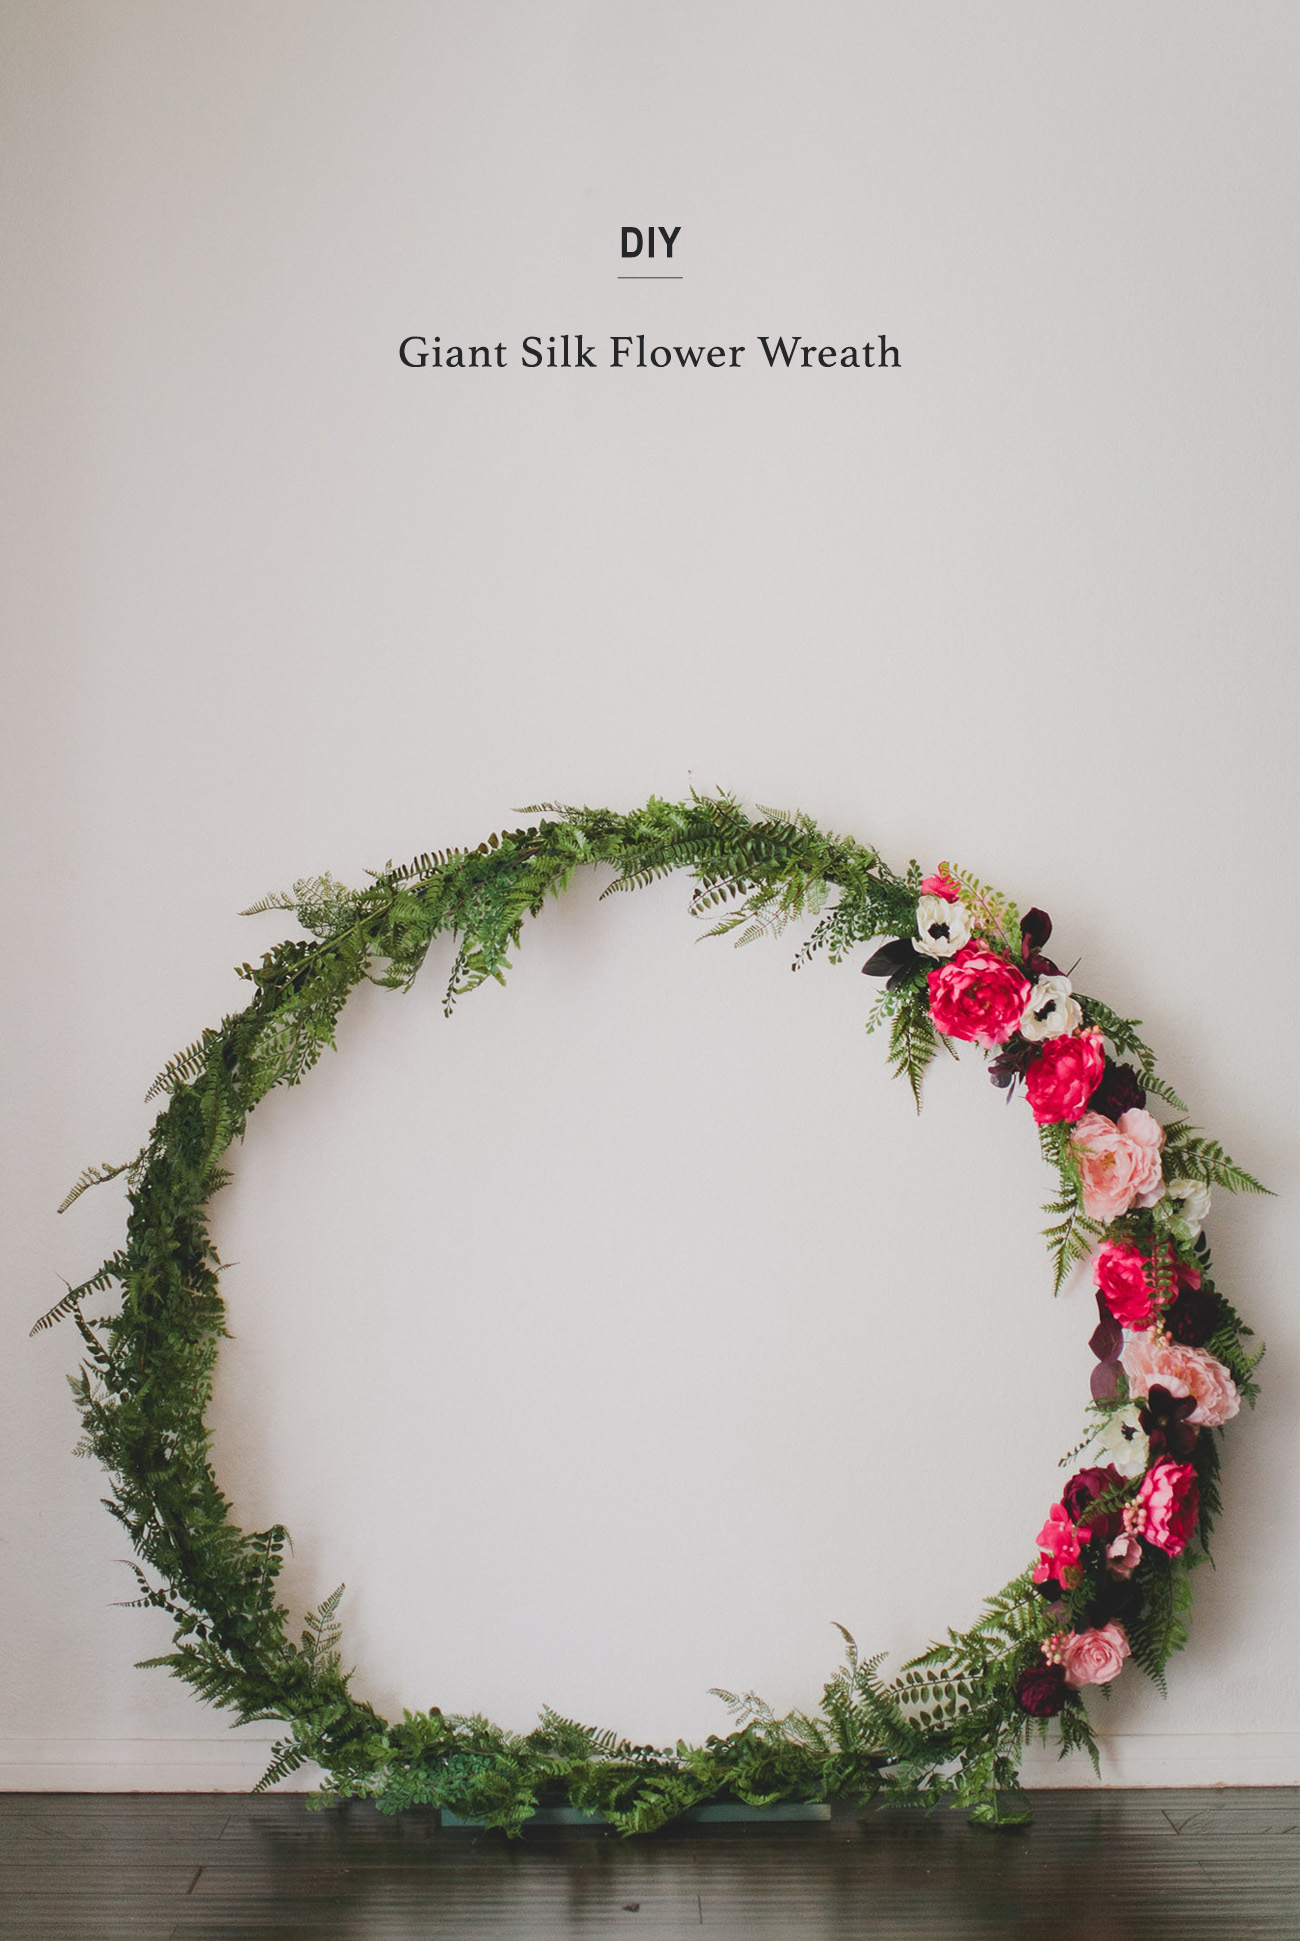 DIY Giant Silk Flower Wreath